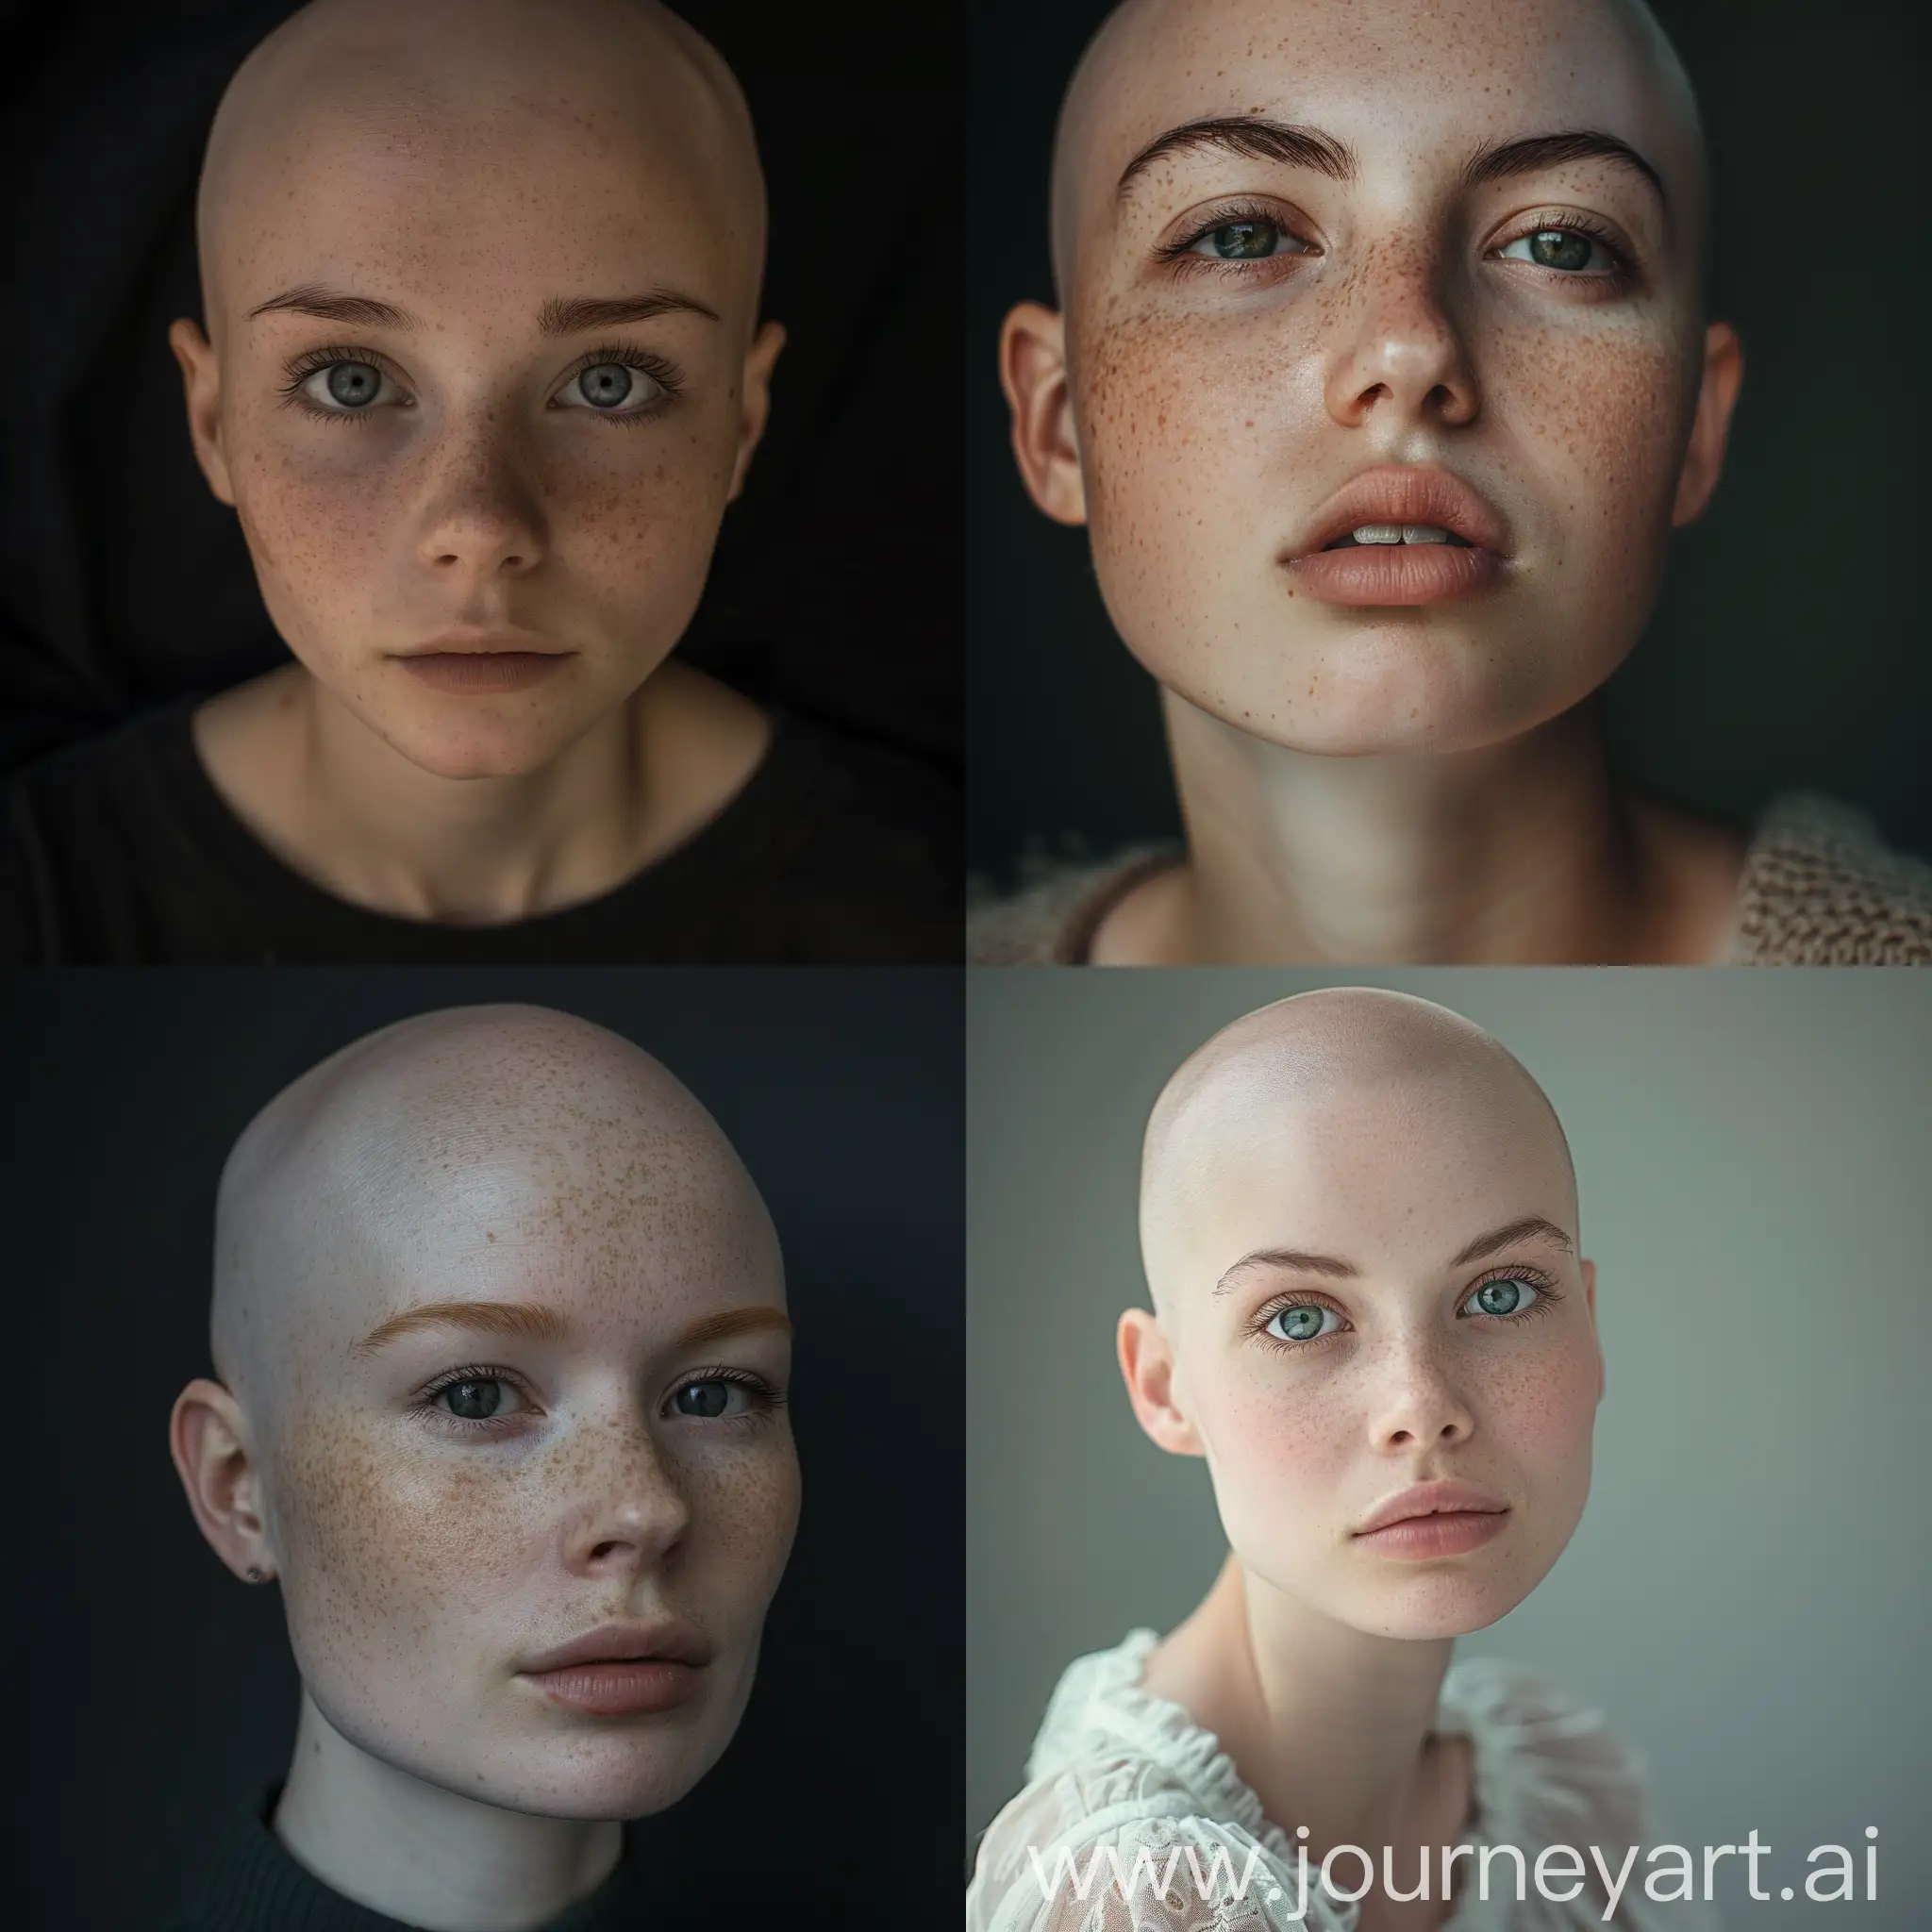 Portrait-of-Bald-Girl-with-Intense-Gaze